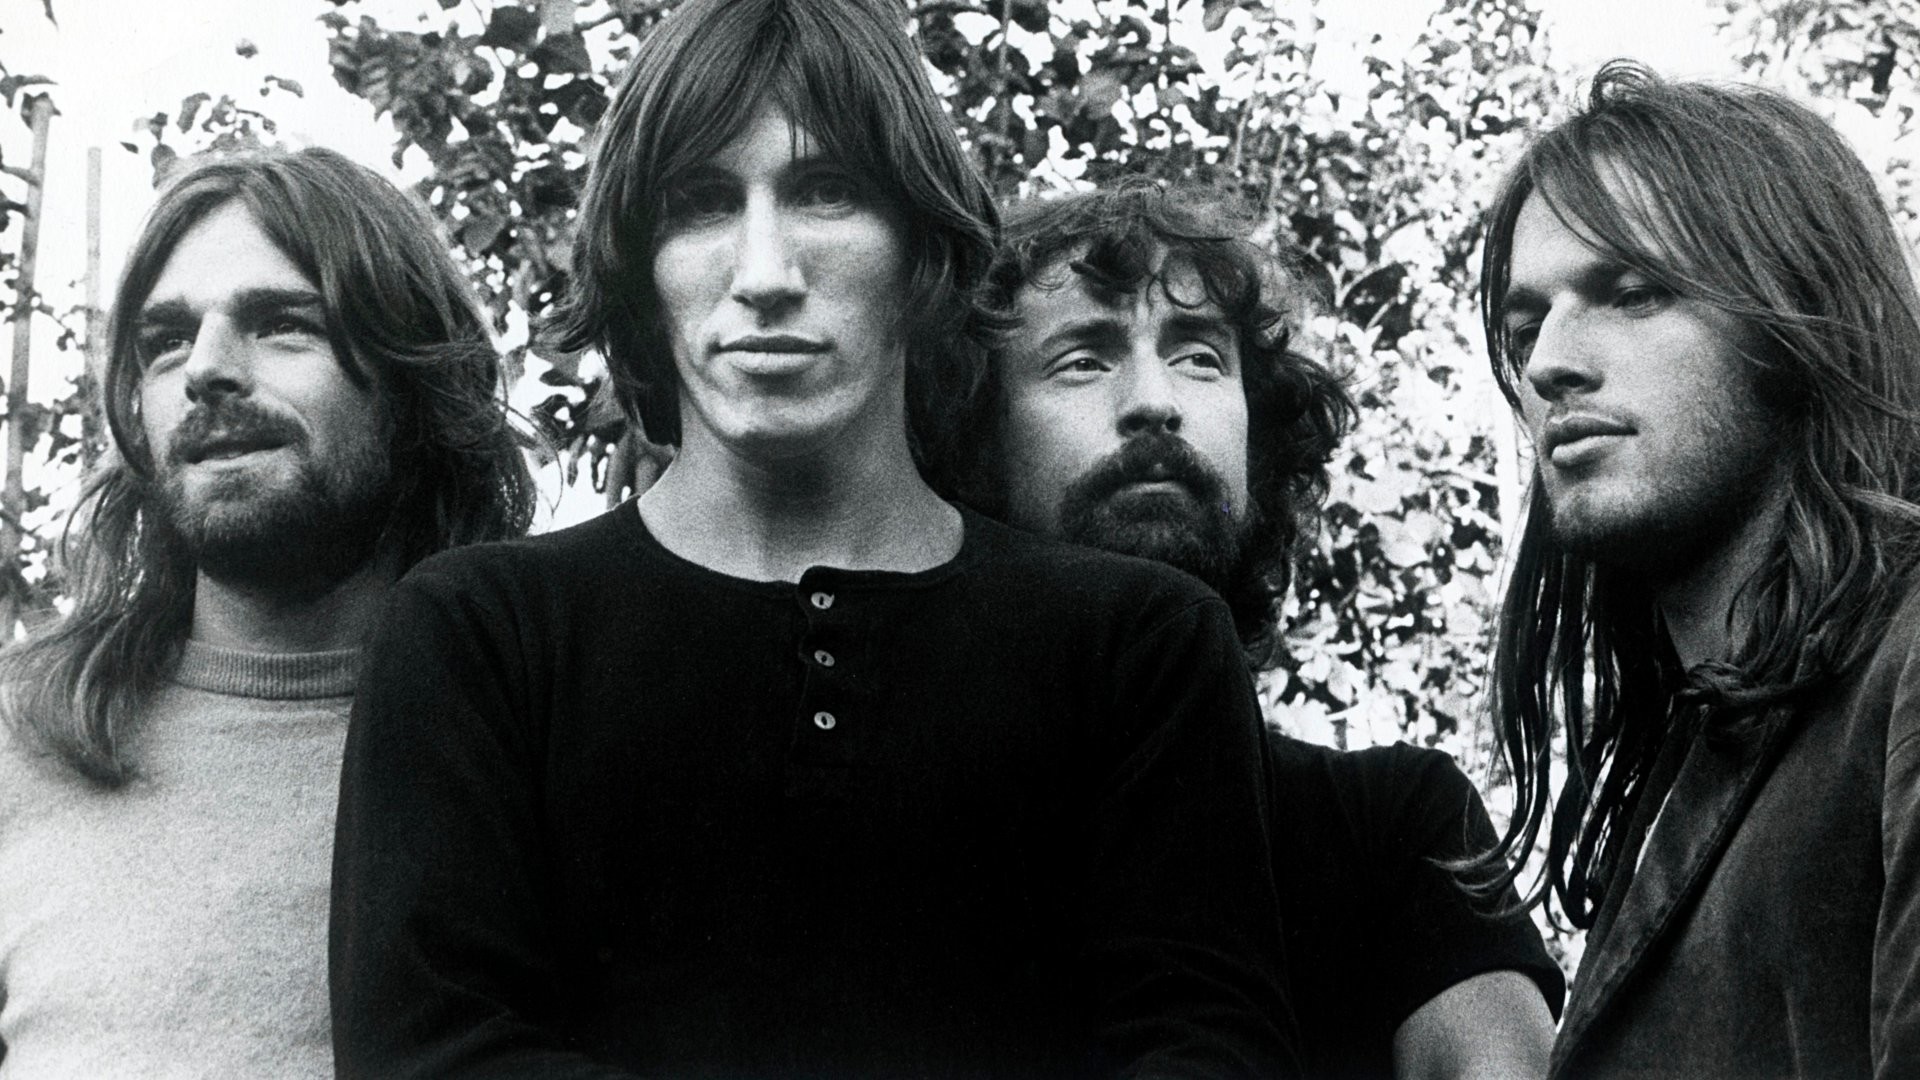 1920x1080 ... Pink Floyd Band Members Wallpaper DSOTM Era 1973